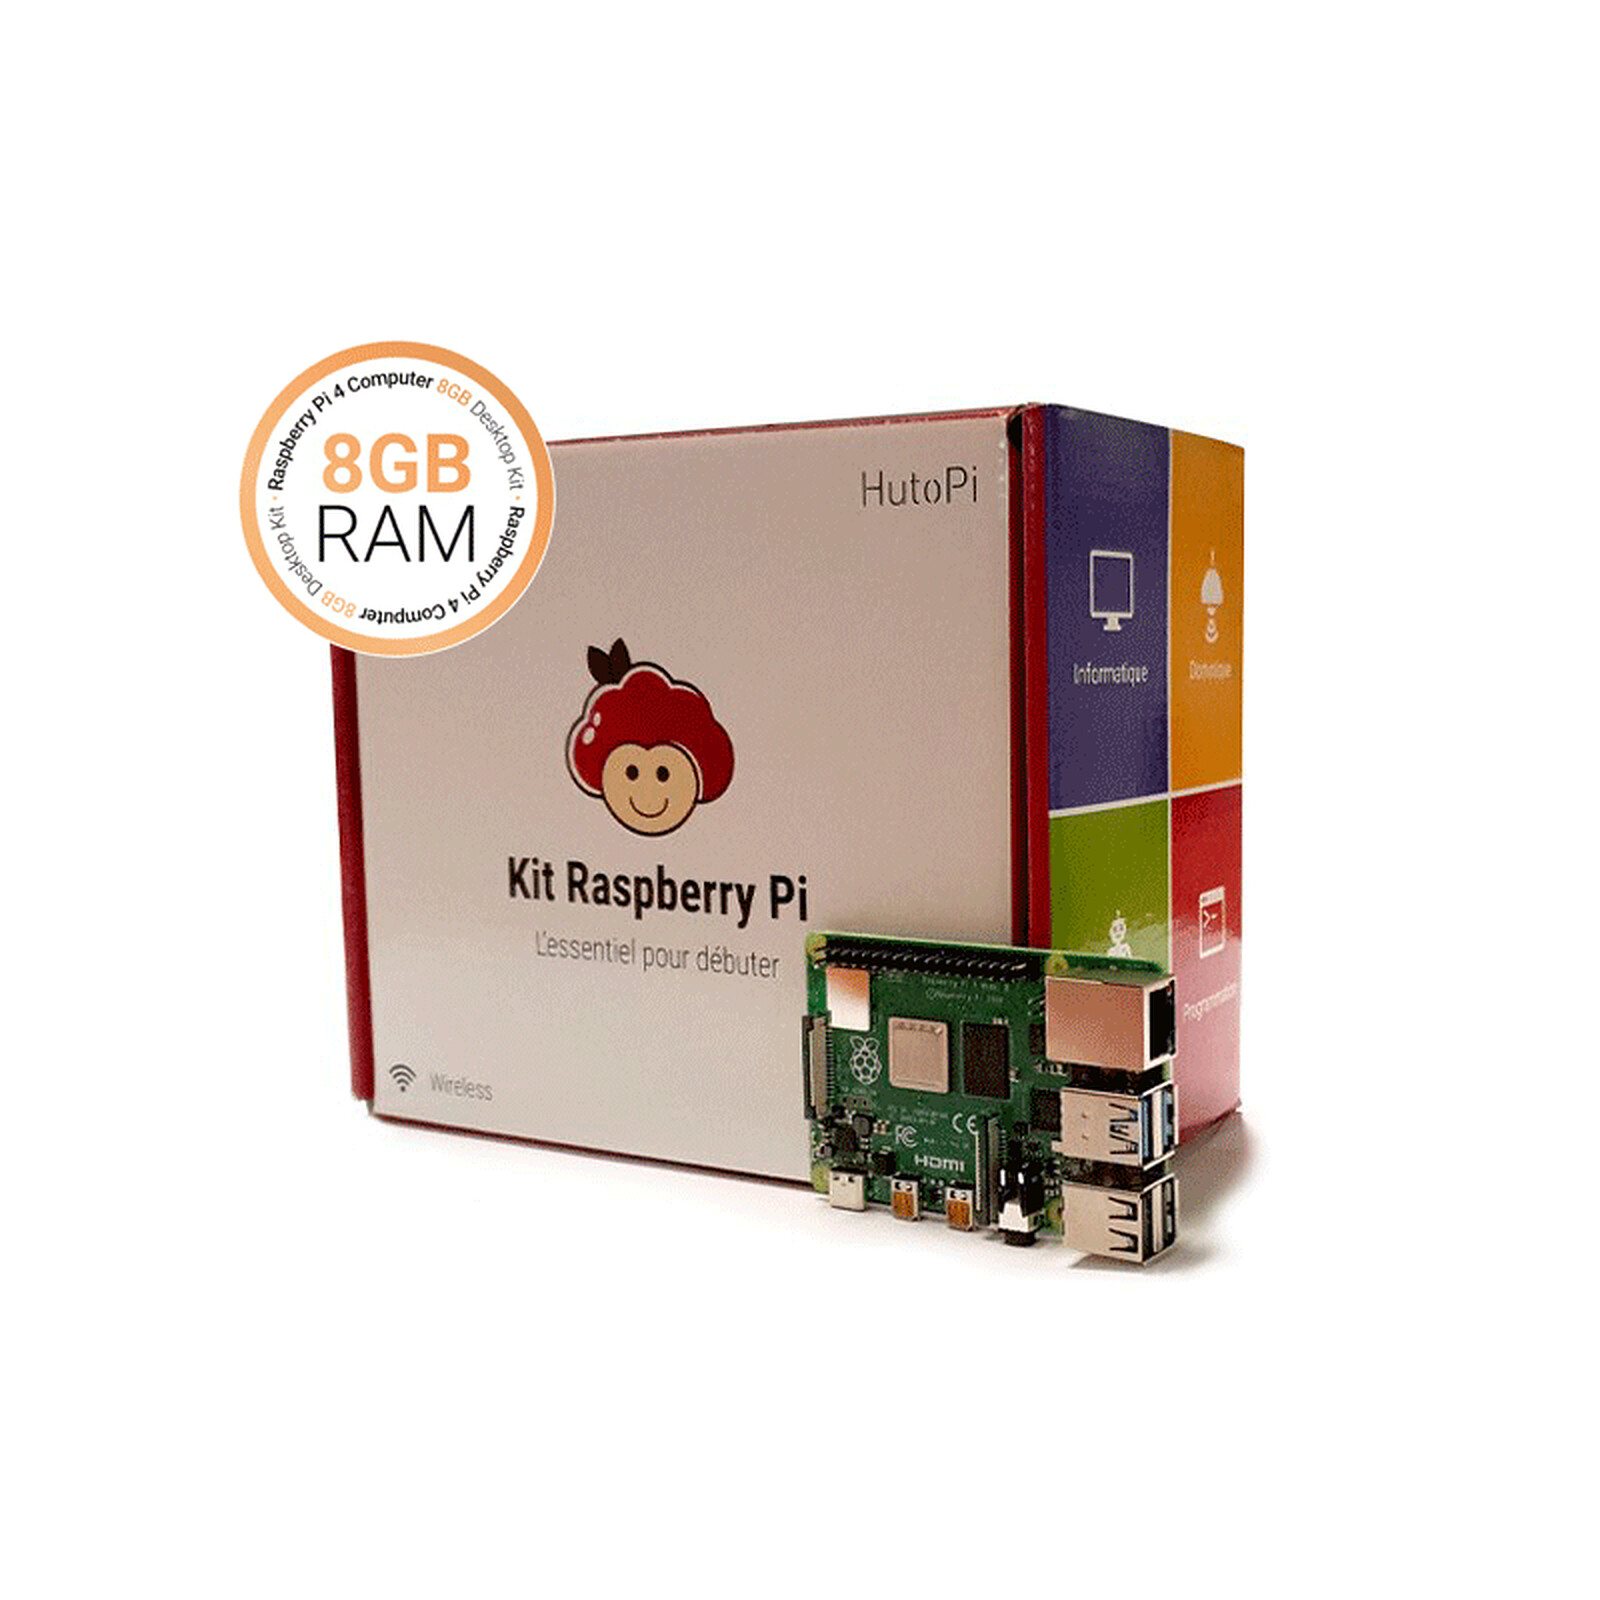 Hutopi Desktop Kit Raspberry Pi 4 8 Go - Kit Raspberry Pi